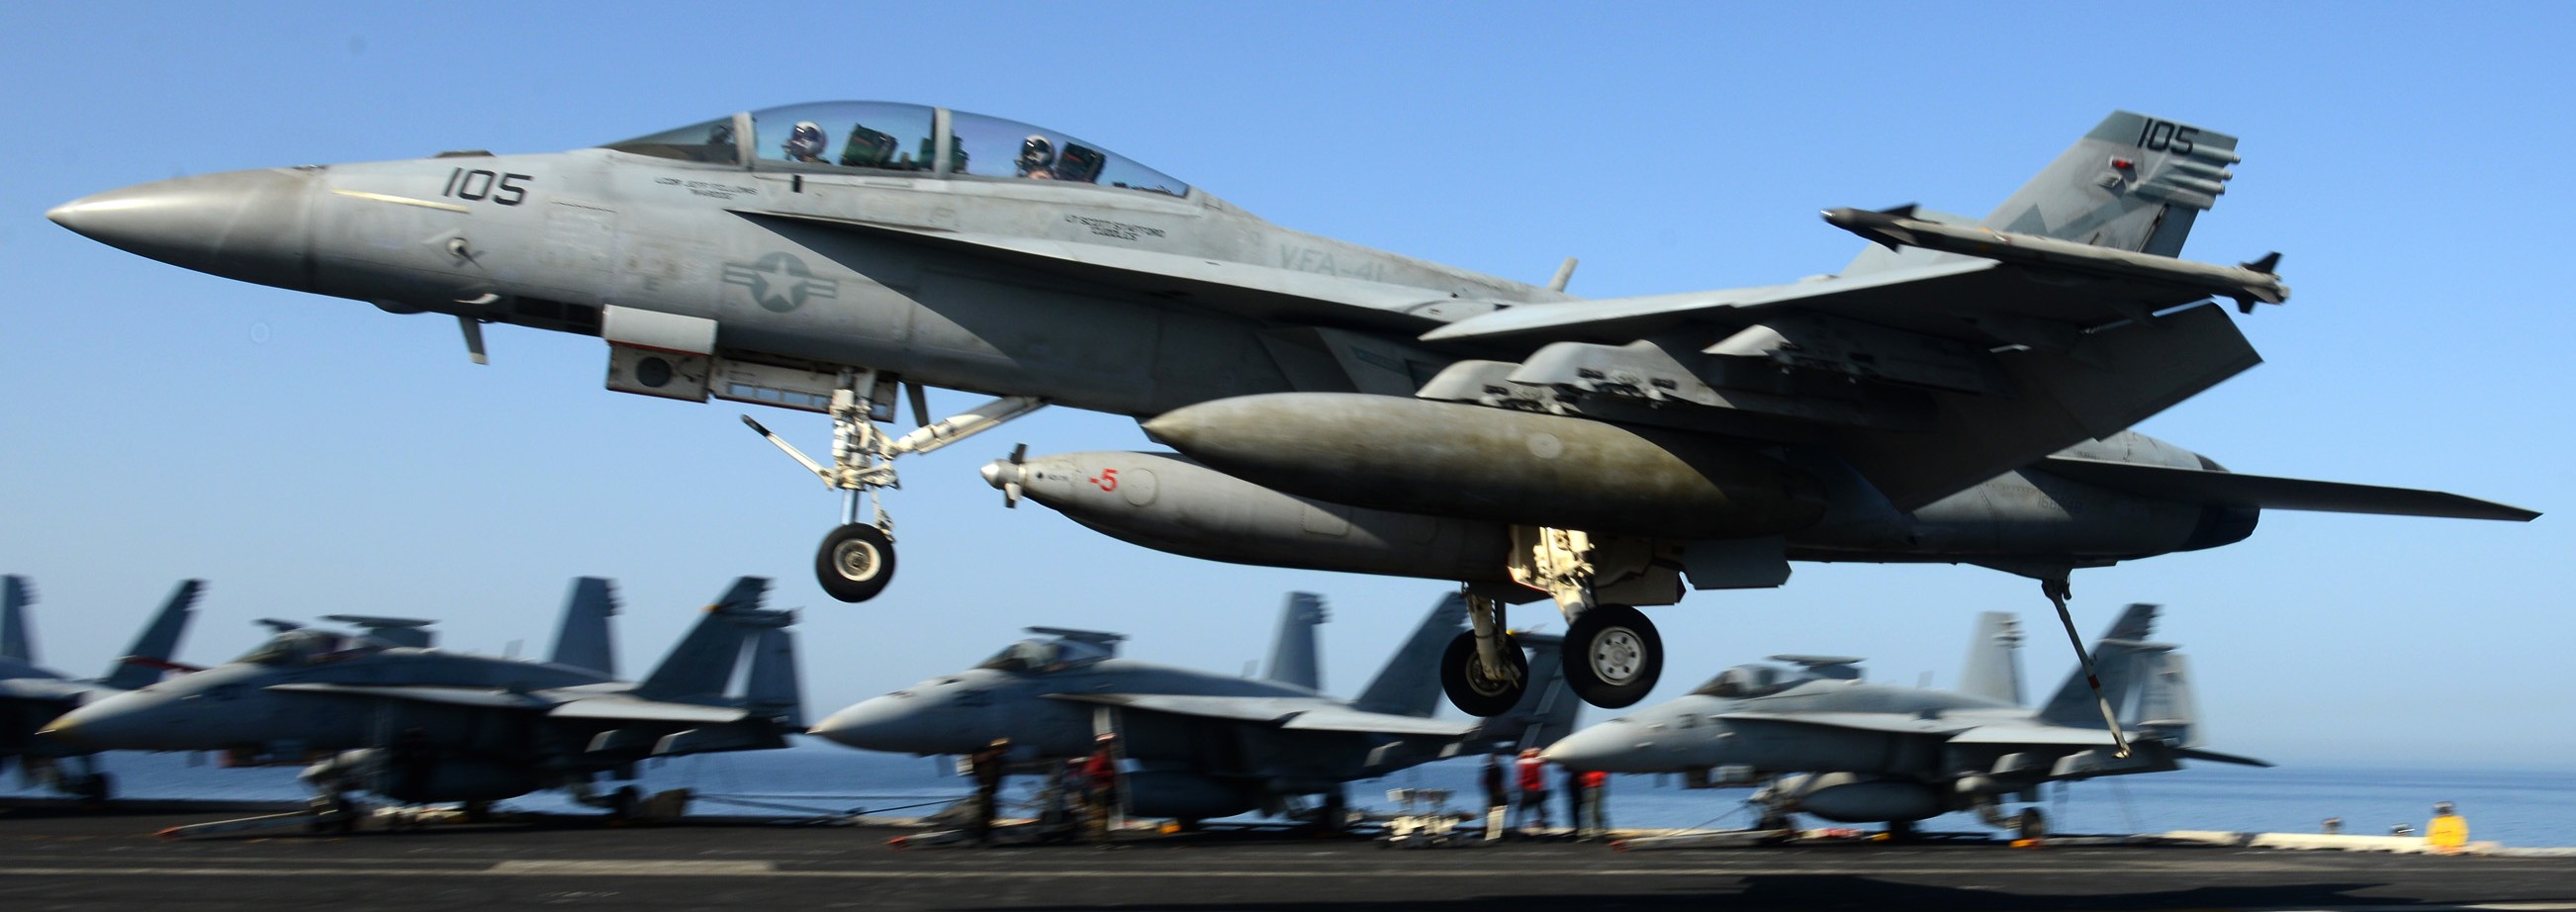 vfa-41 black aces strike fighter squadron f/a-18f super hornet cvw-9 cvn-70 uss john c. stennis us navy 83p